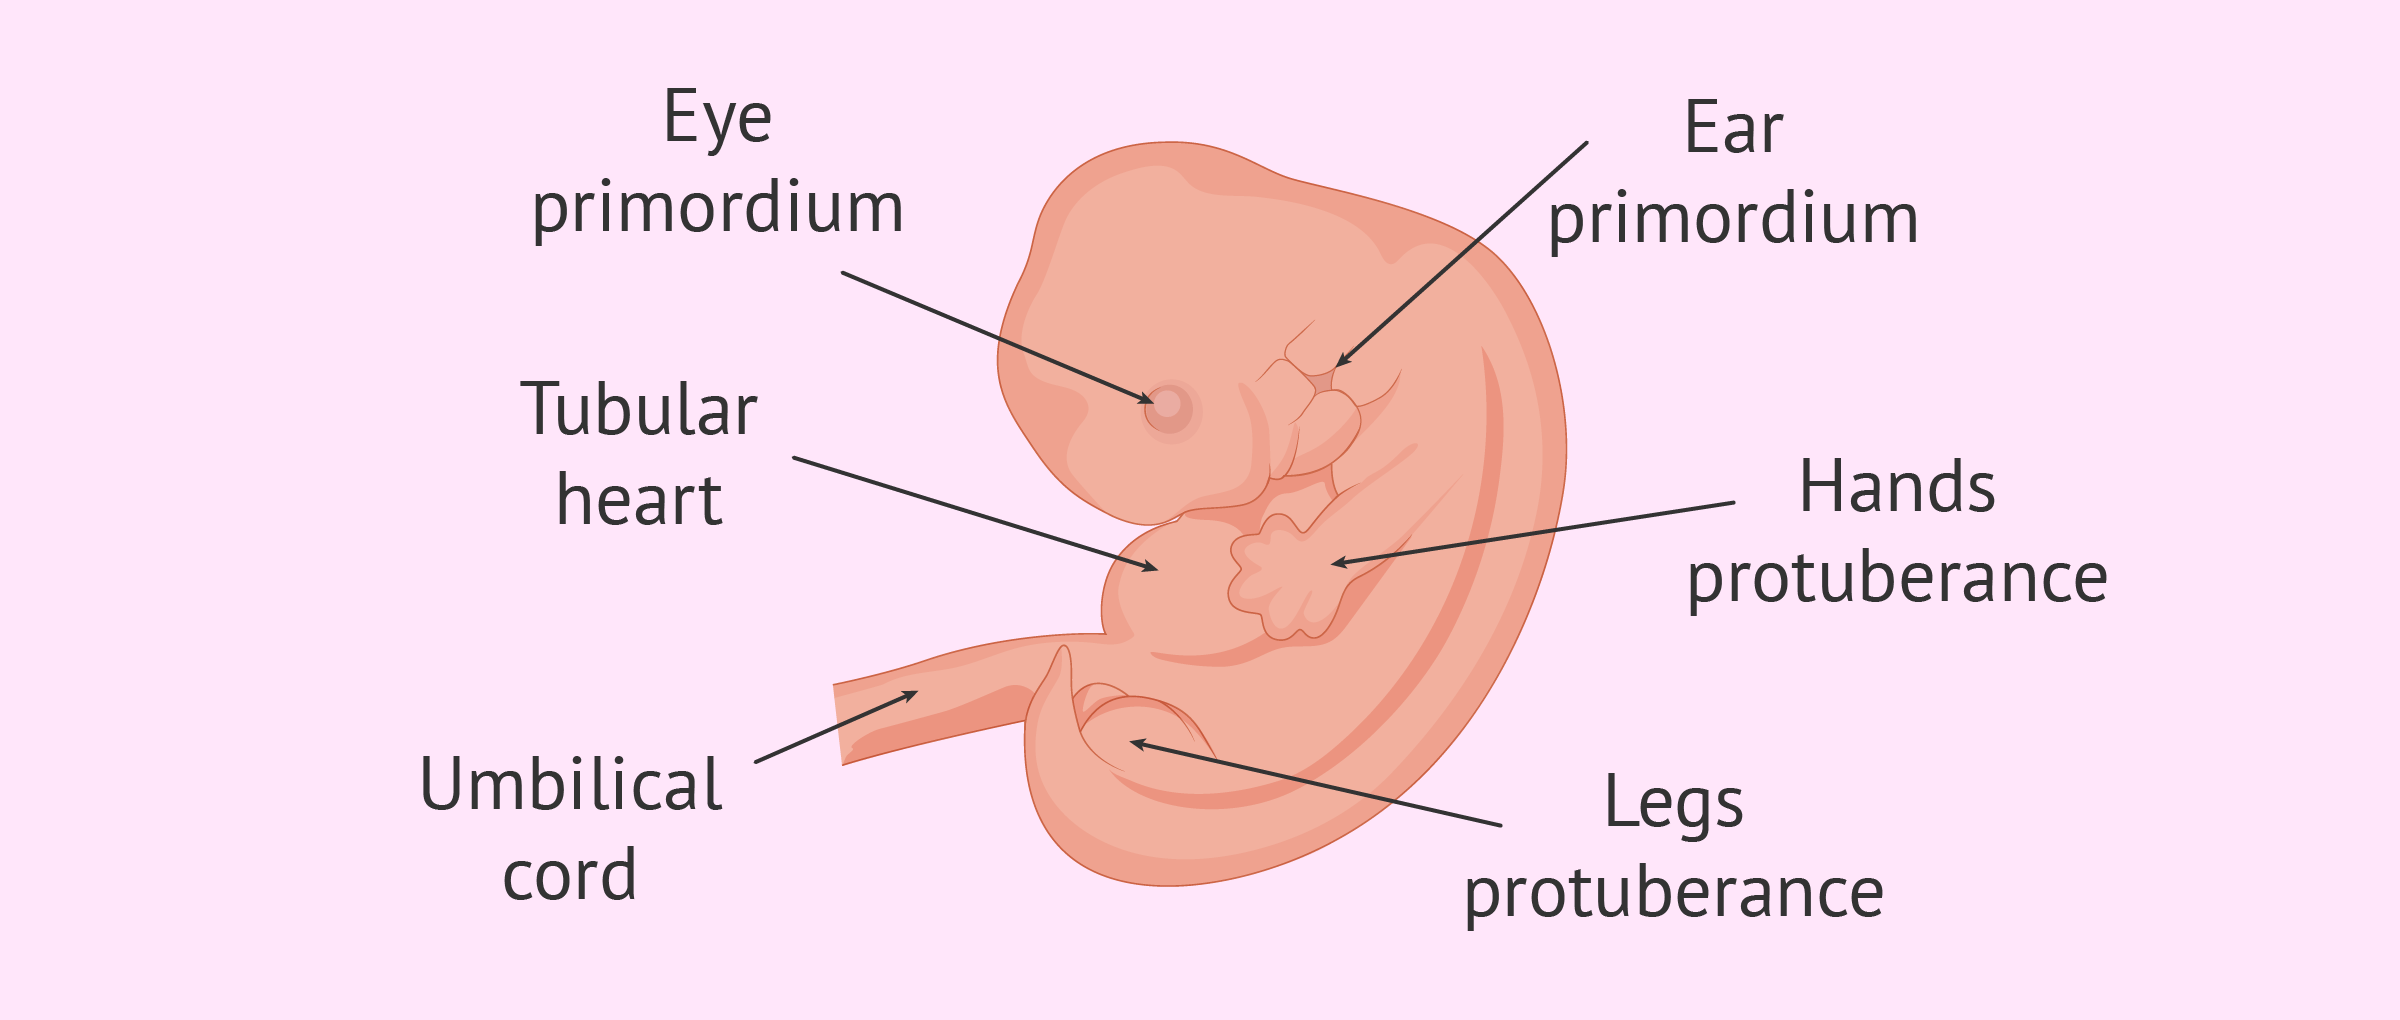 6 Weeks Development Embryo